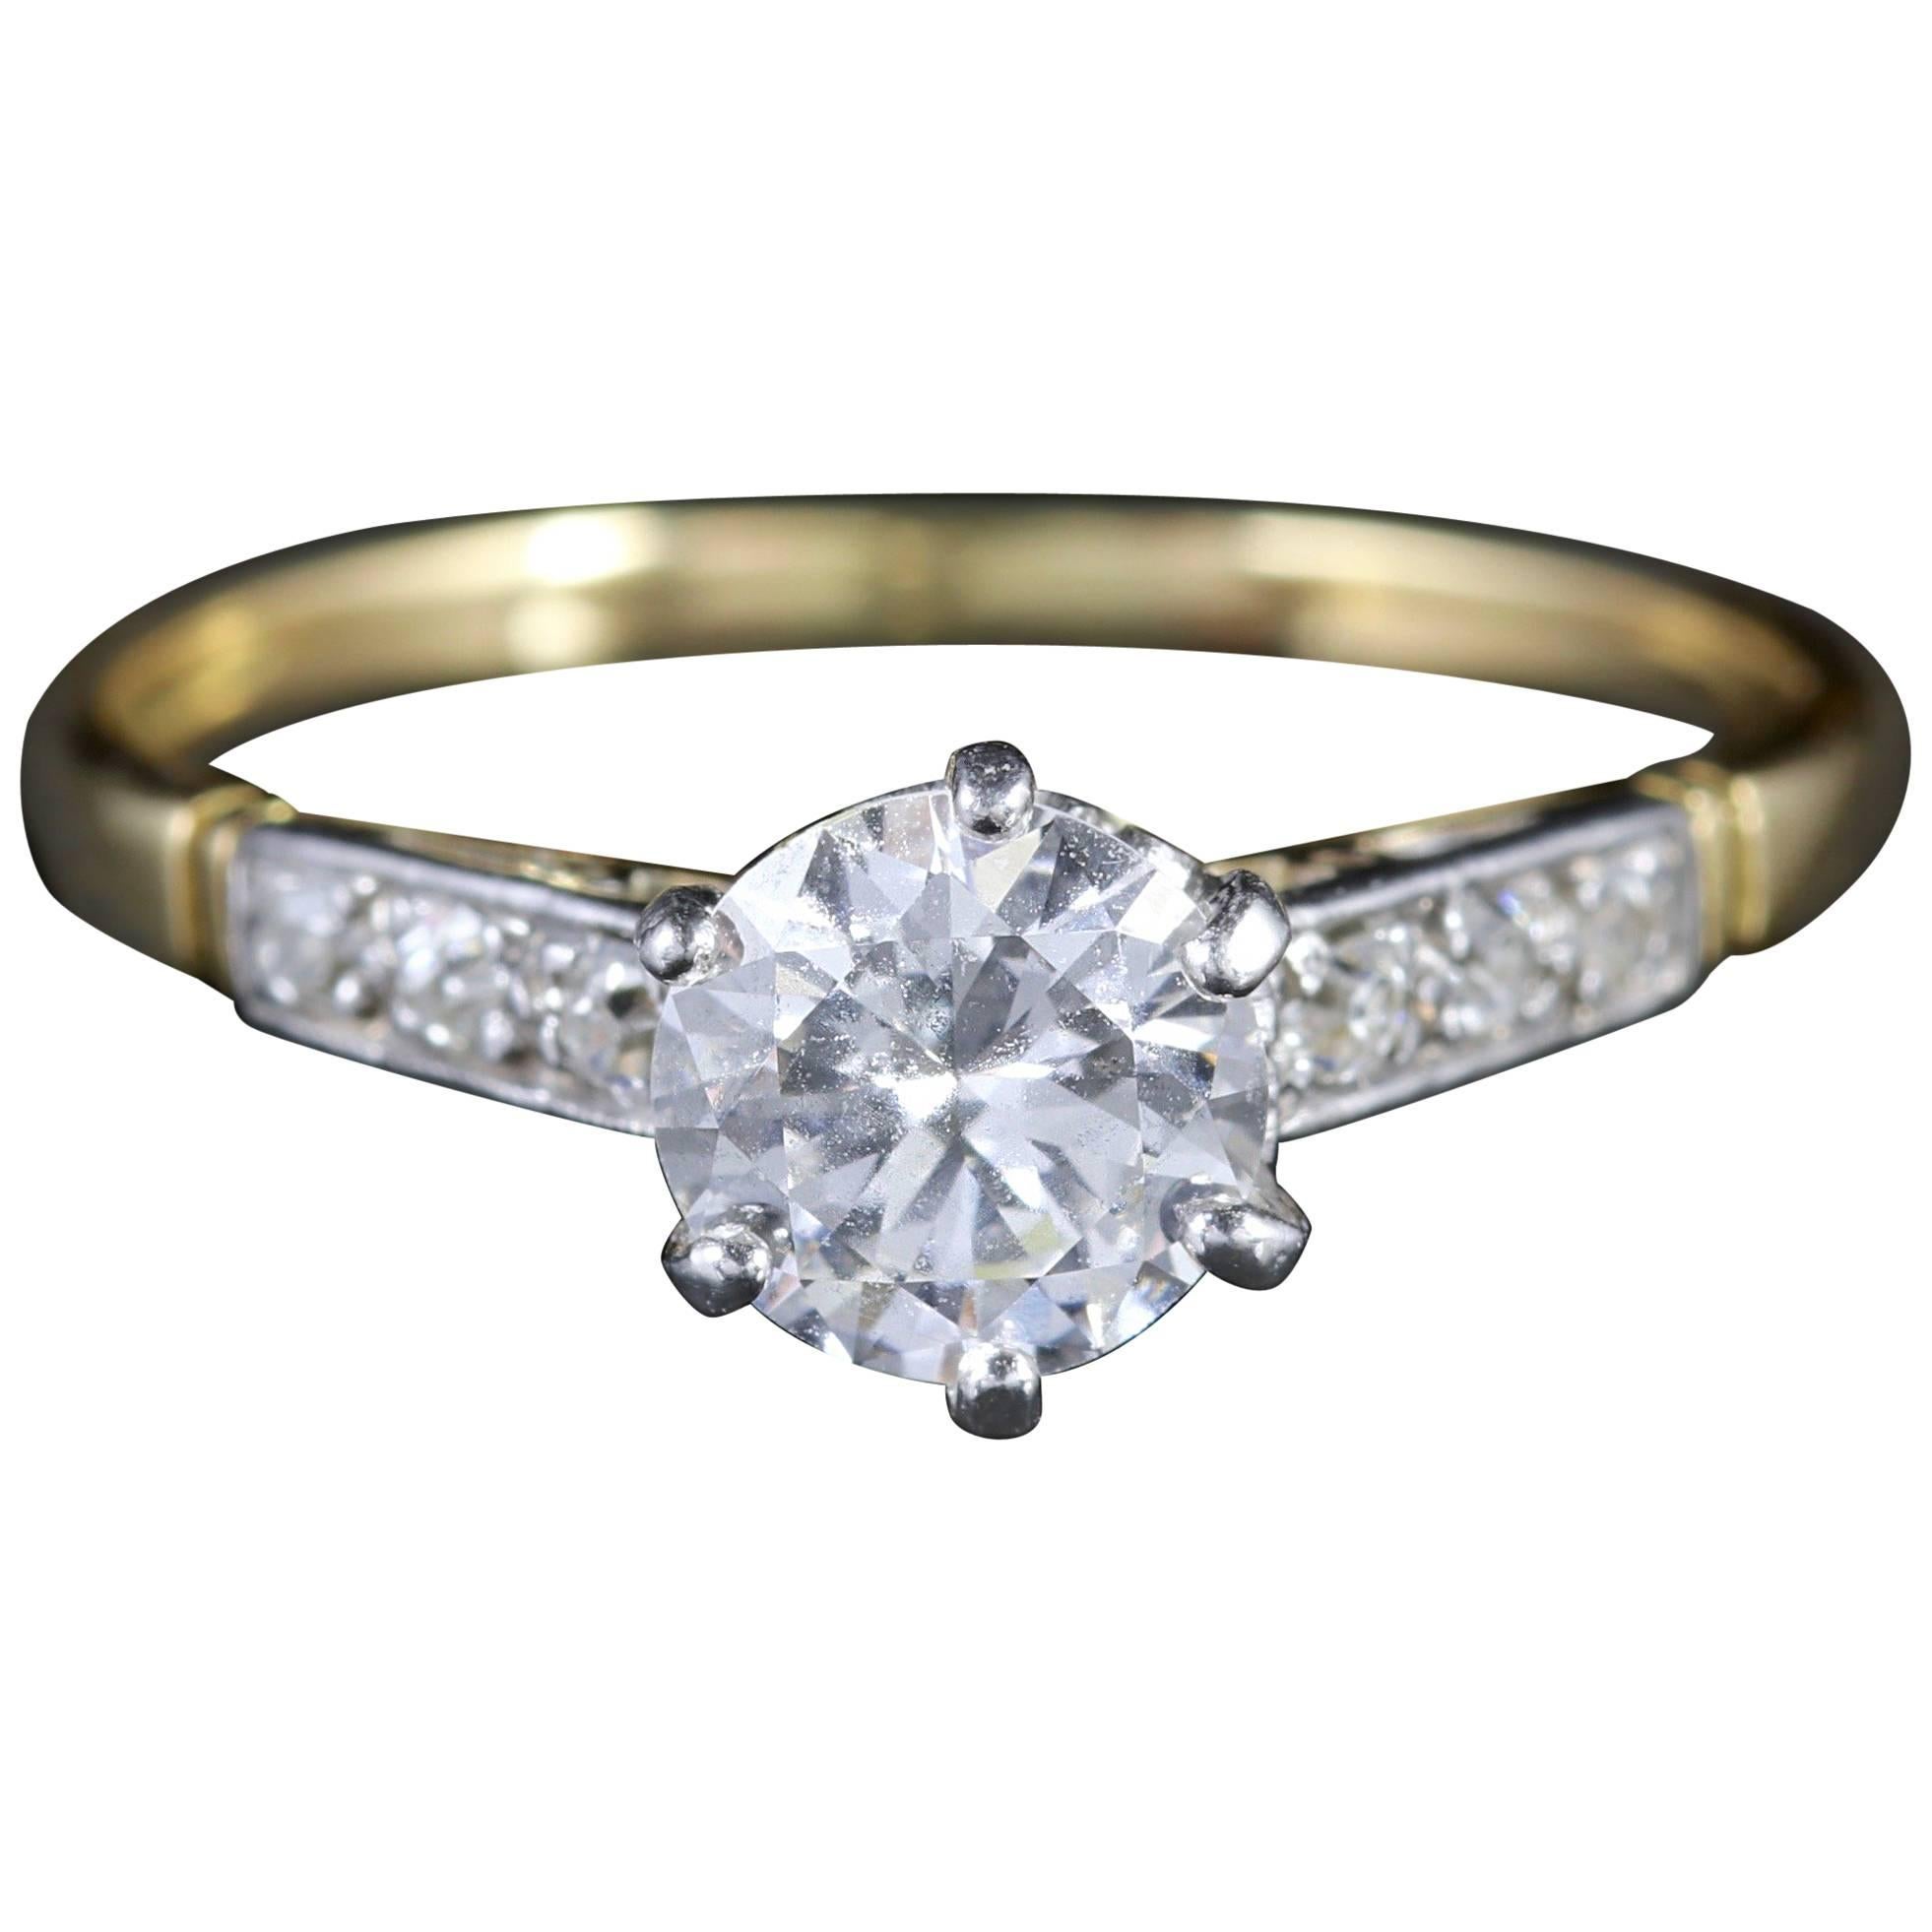 Antique Edwardian Diamond Solitaire Engagement Ring, circa 1915 For Sale